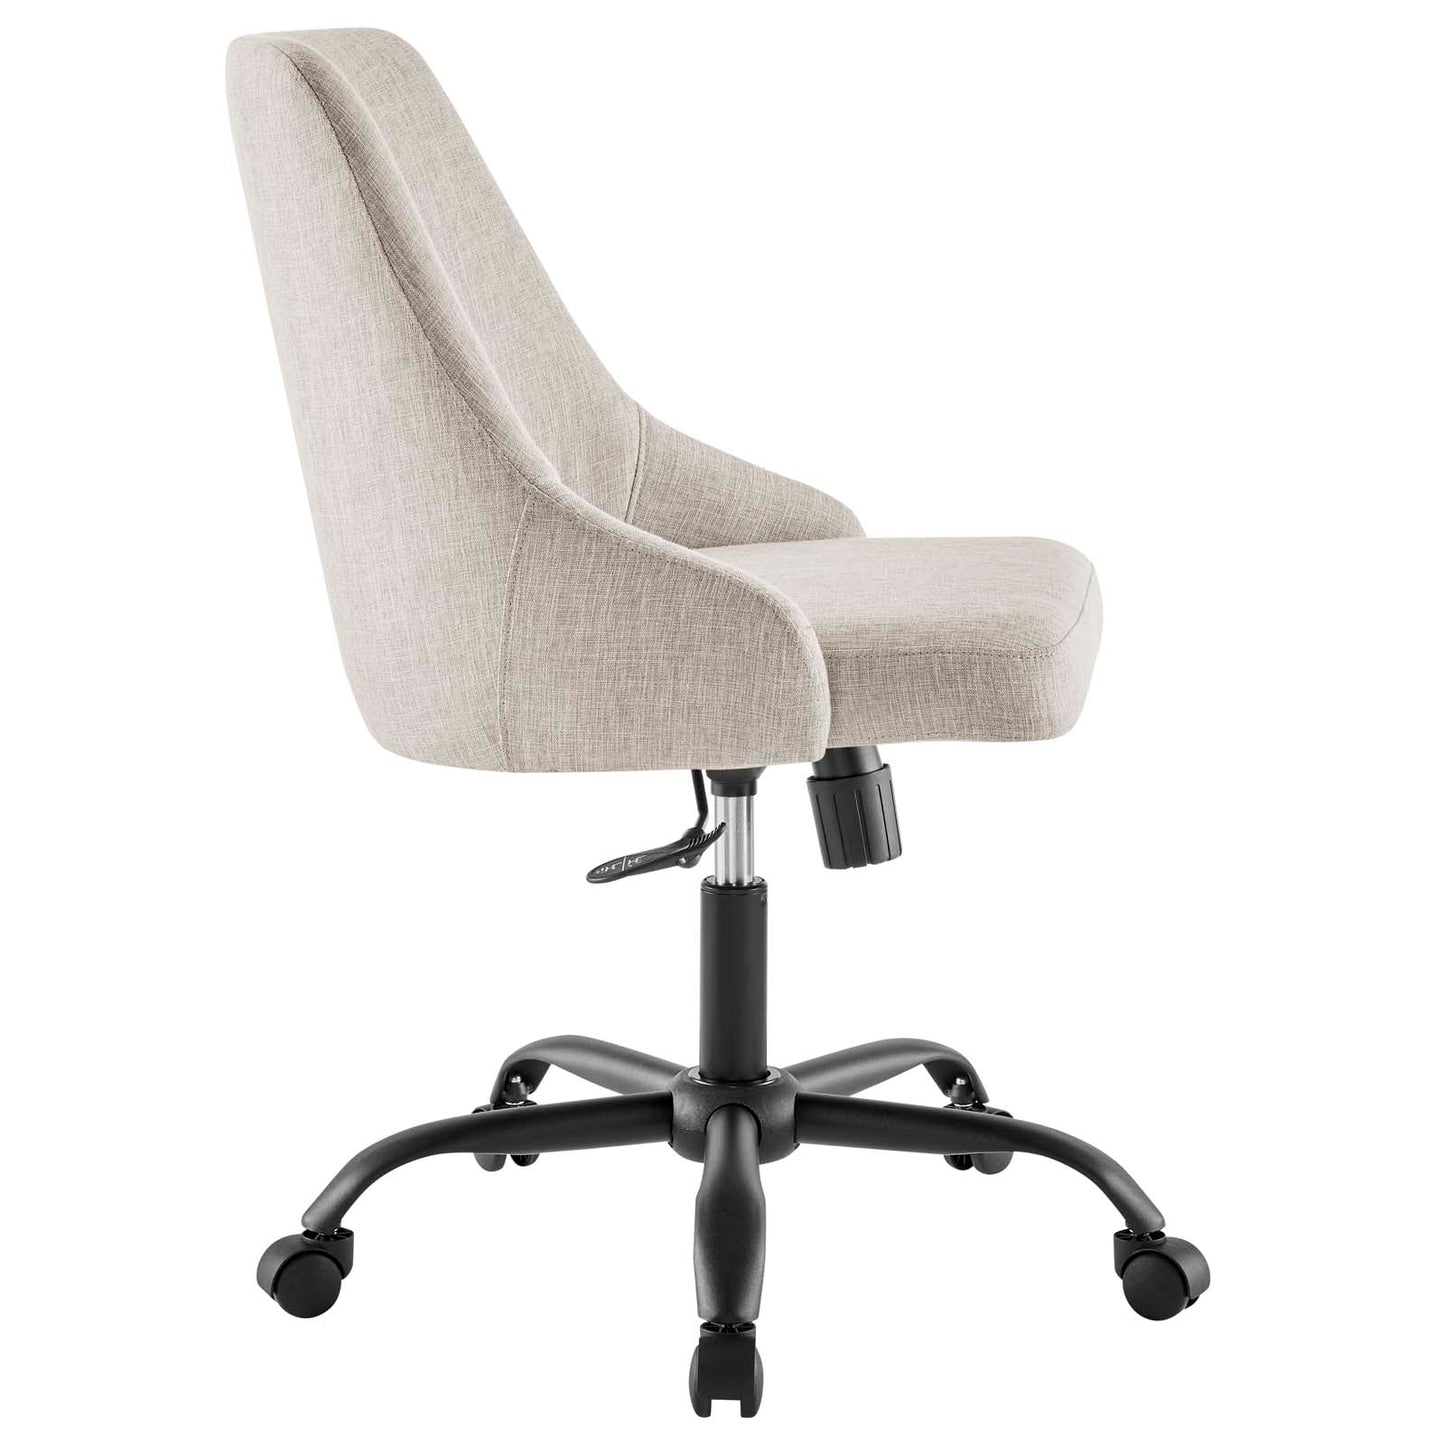 Designate Swivel Upholstered Office Chair Black Beige EEI-4371-BLK-BEI